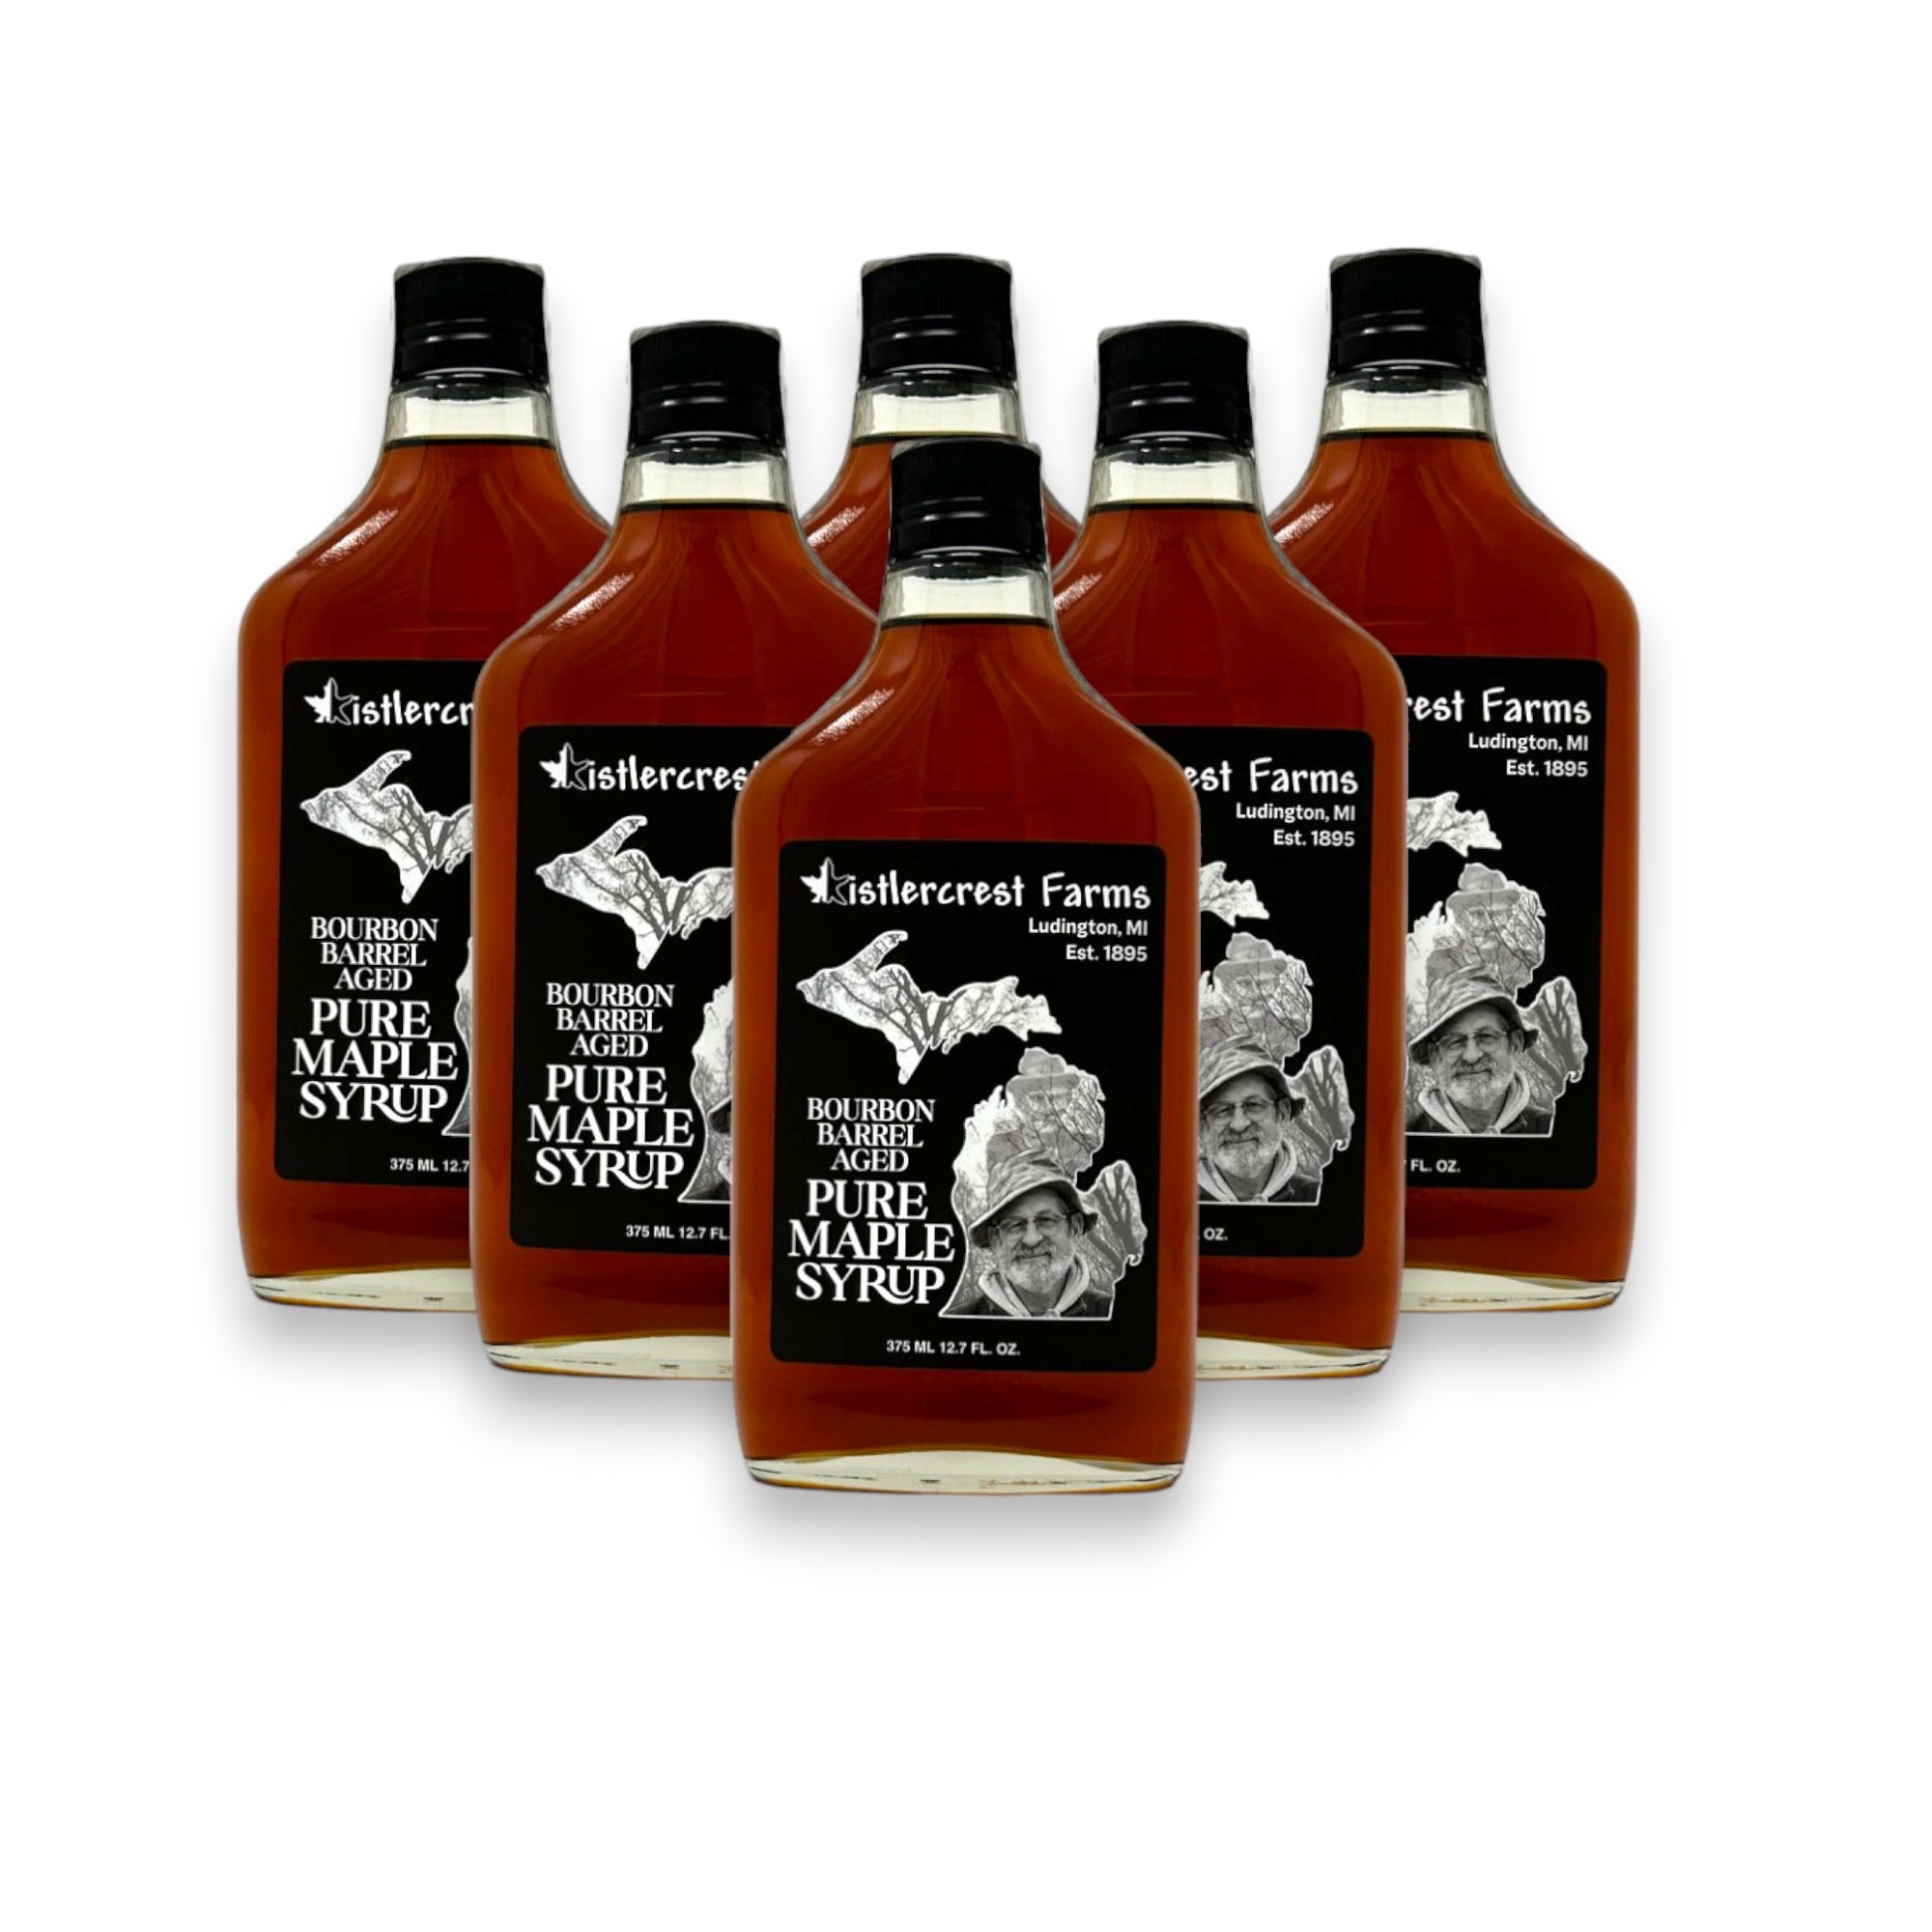 Bourbon Barrel Aged Maple Syrup.